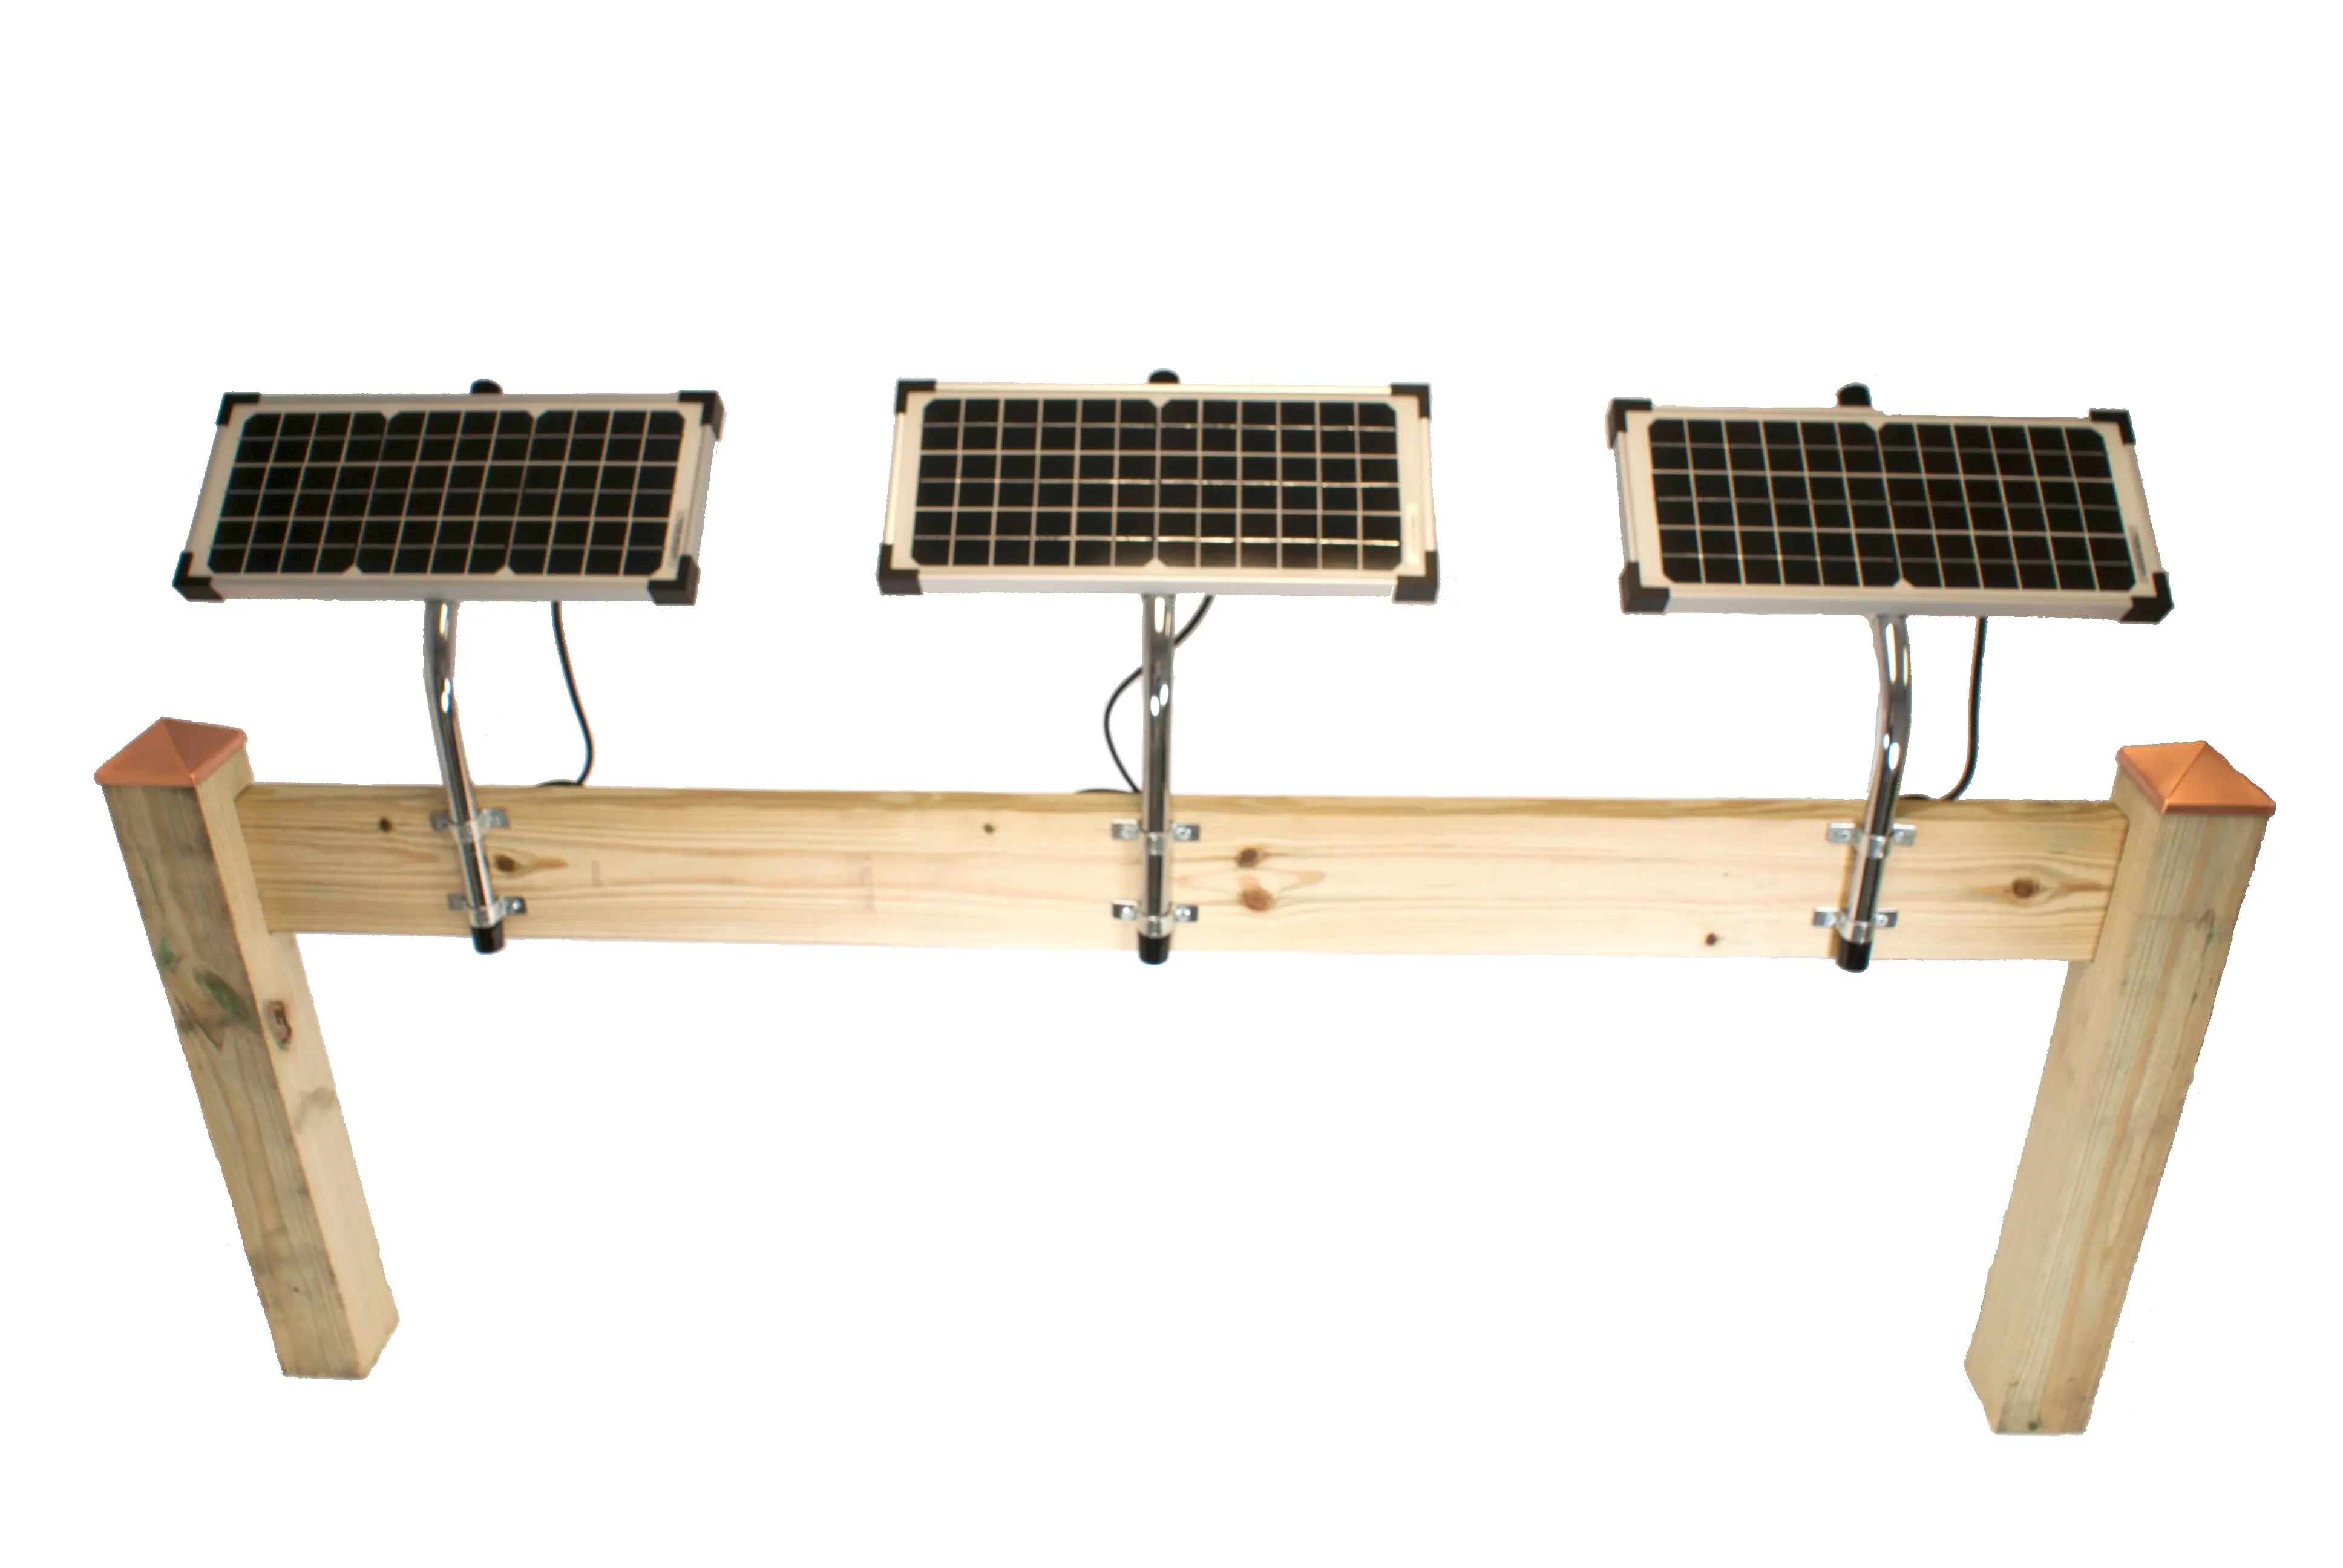 AXDP Ghost Controls 10 Watt Monocrystalline Solar Panels, 3 in a row linked together. 